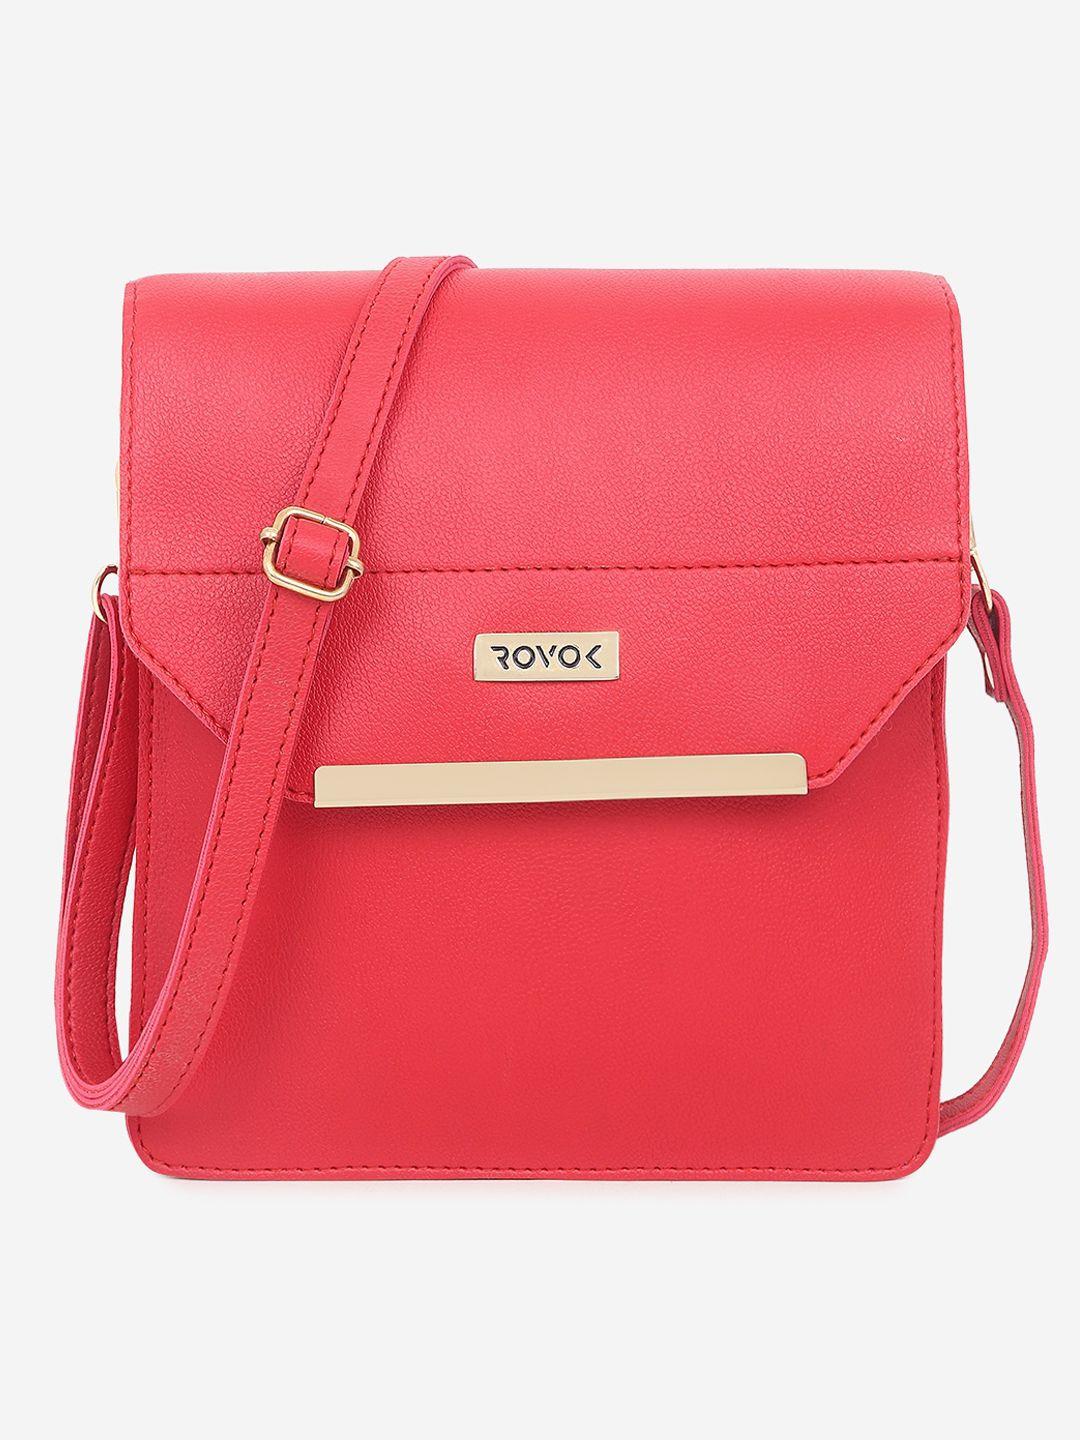 rovok red pu oversized structured sling bag